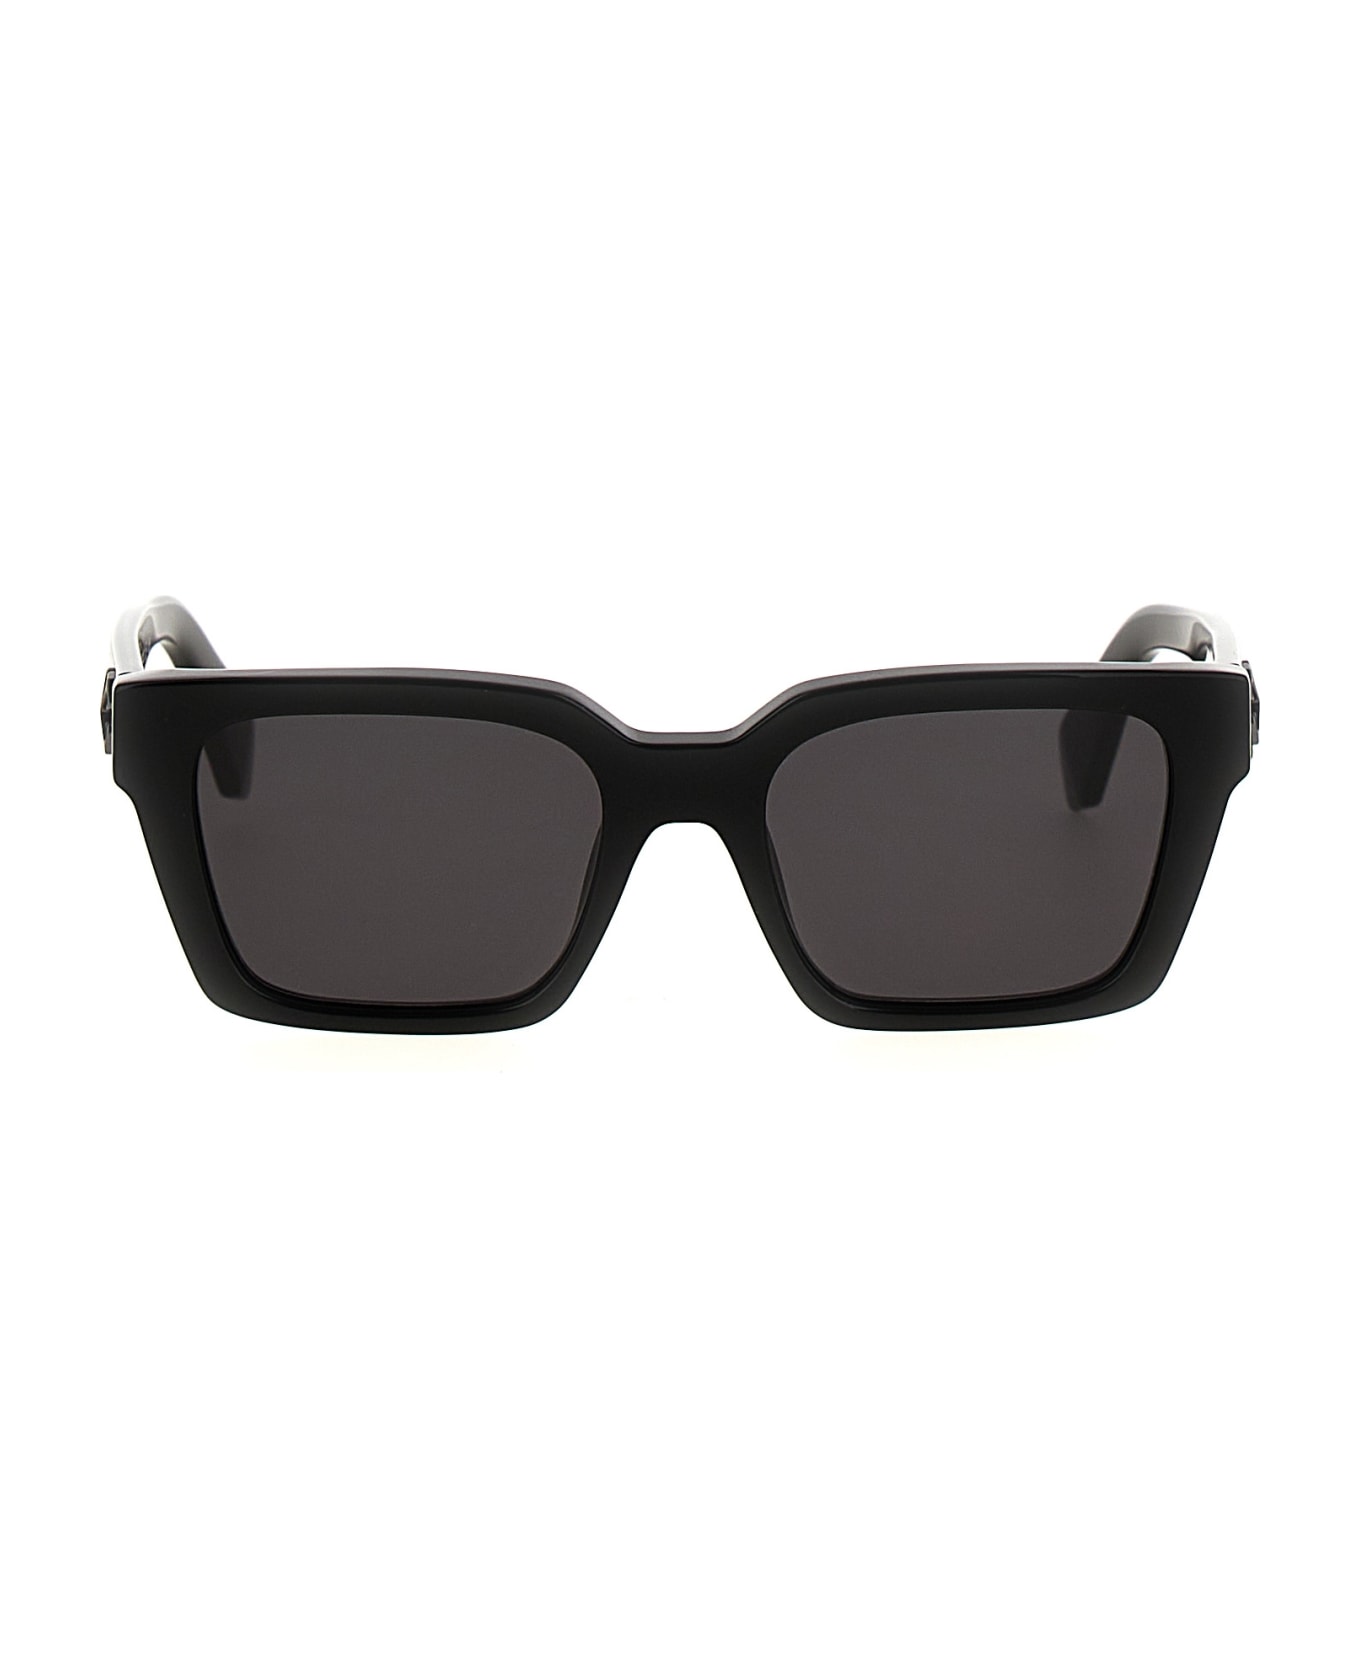 Off-White 'branson' Sunglasses - Black